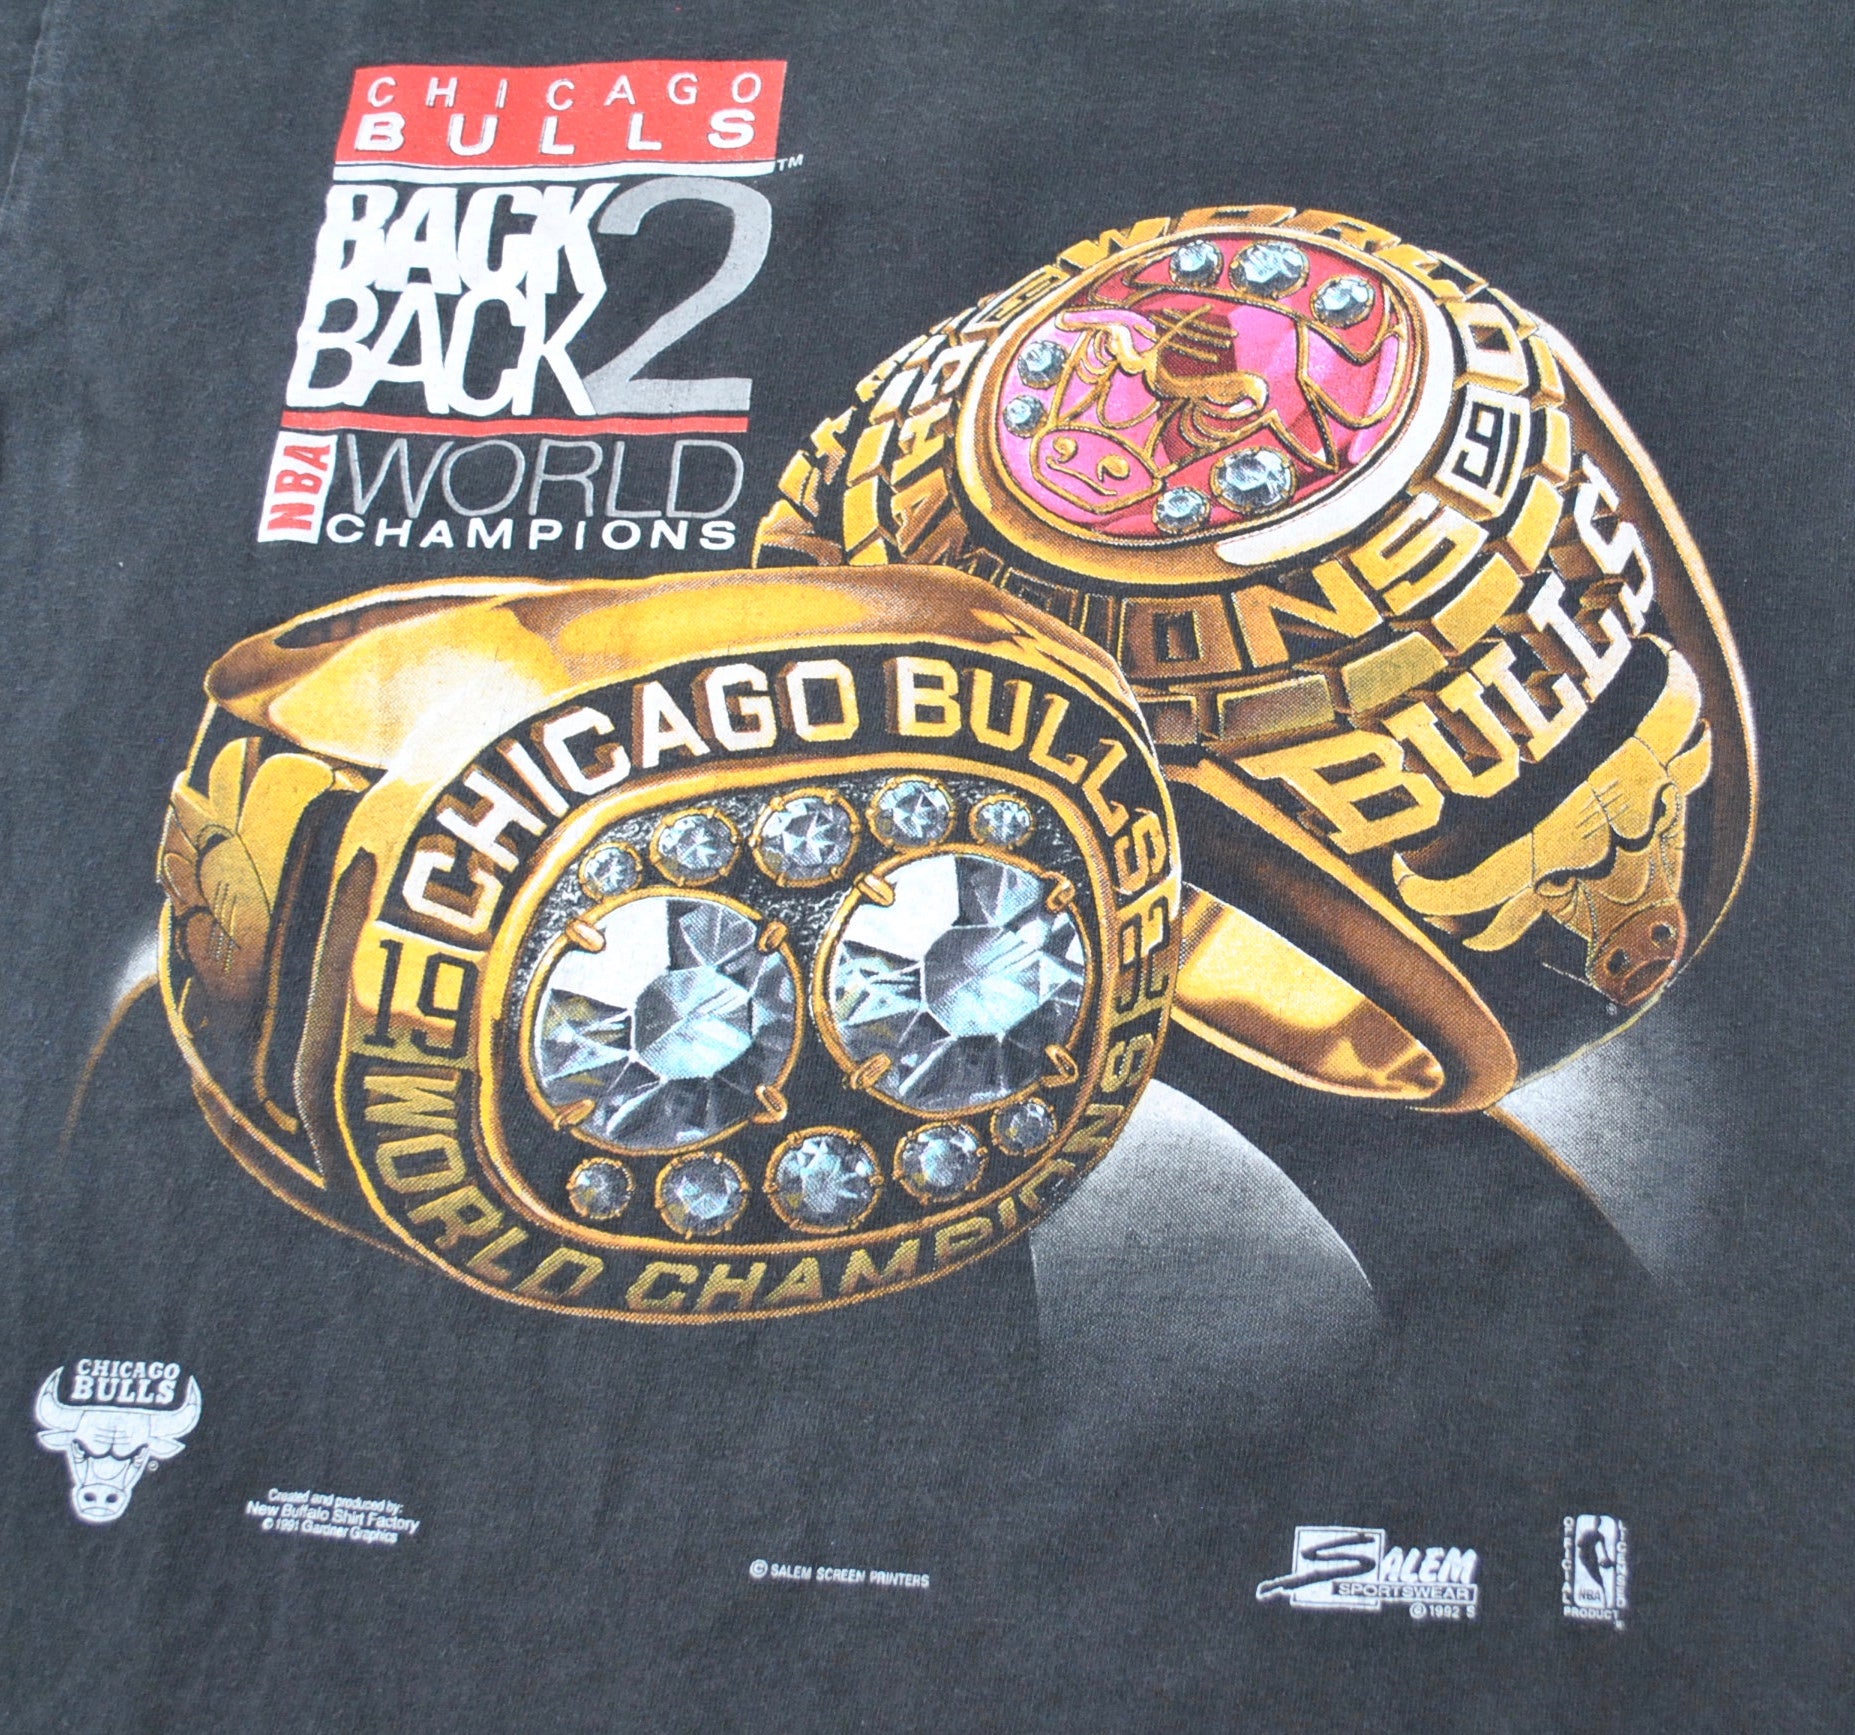 Vintage 1992 Chicago Bulls Back to Back World Champs Shirt